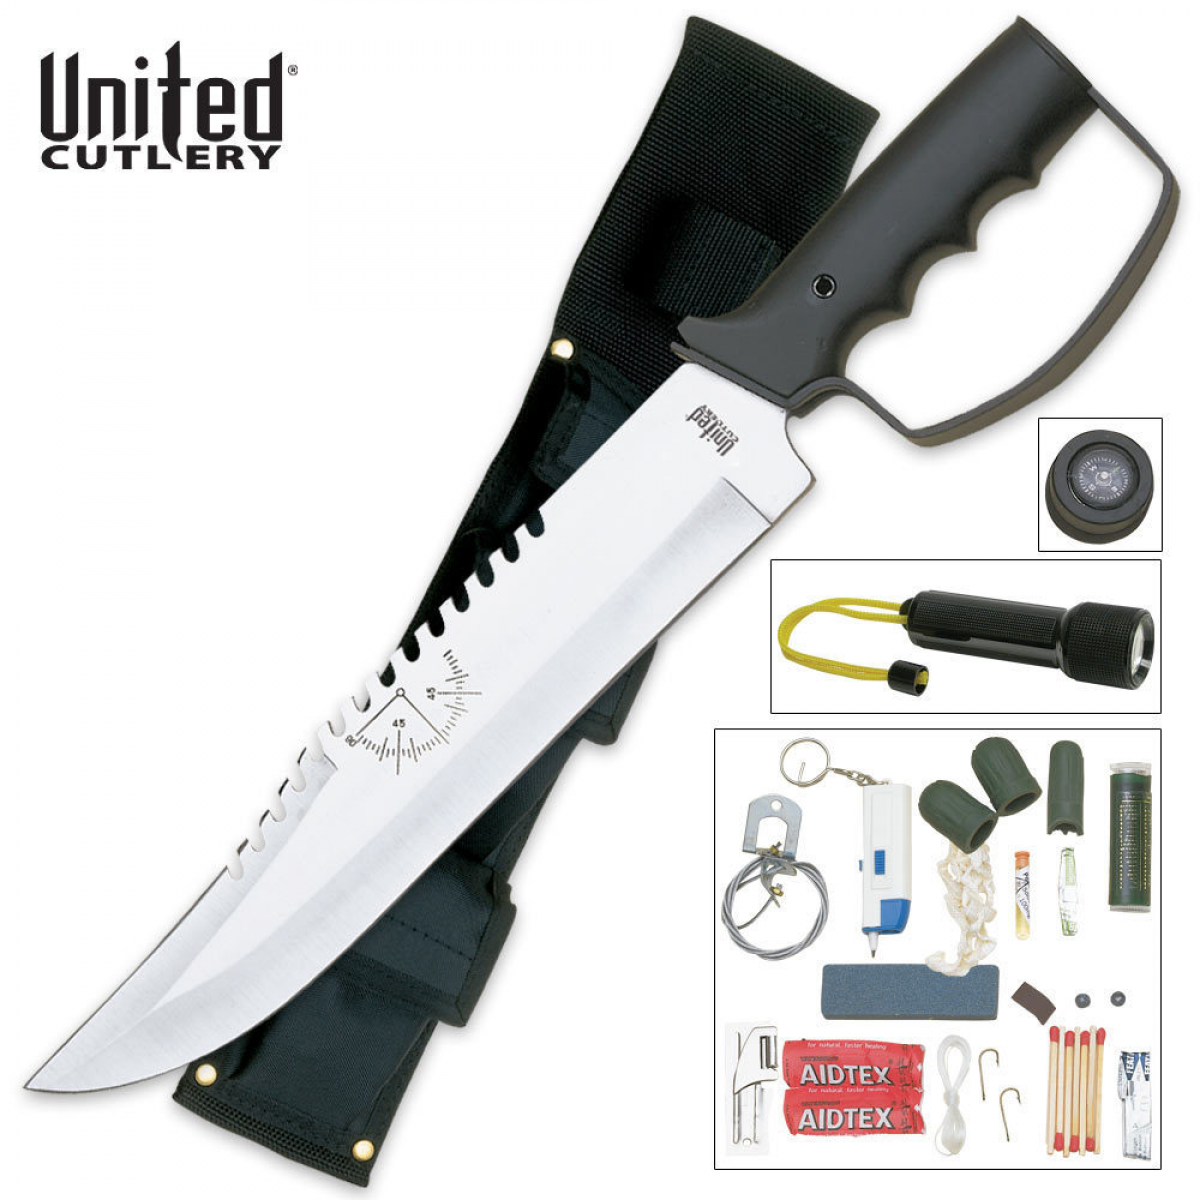 Bushmaster Survival Knife and Kit